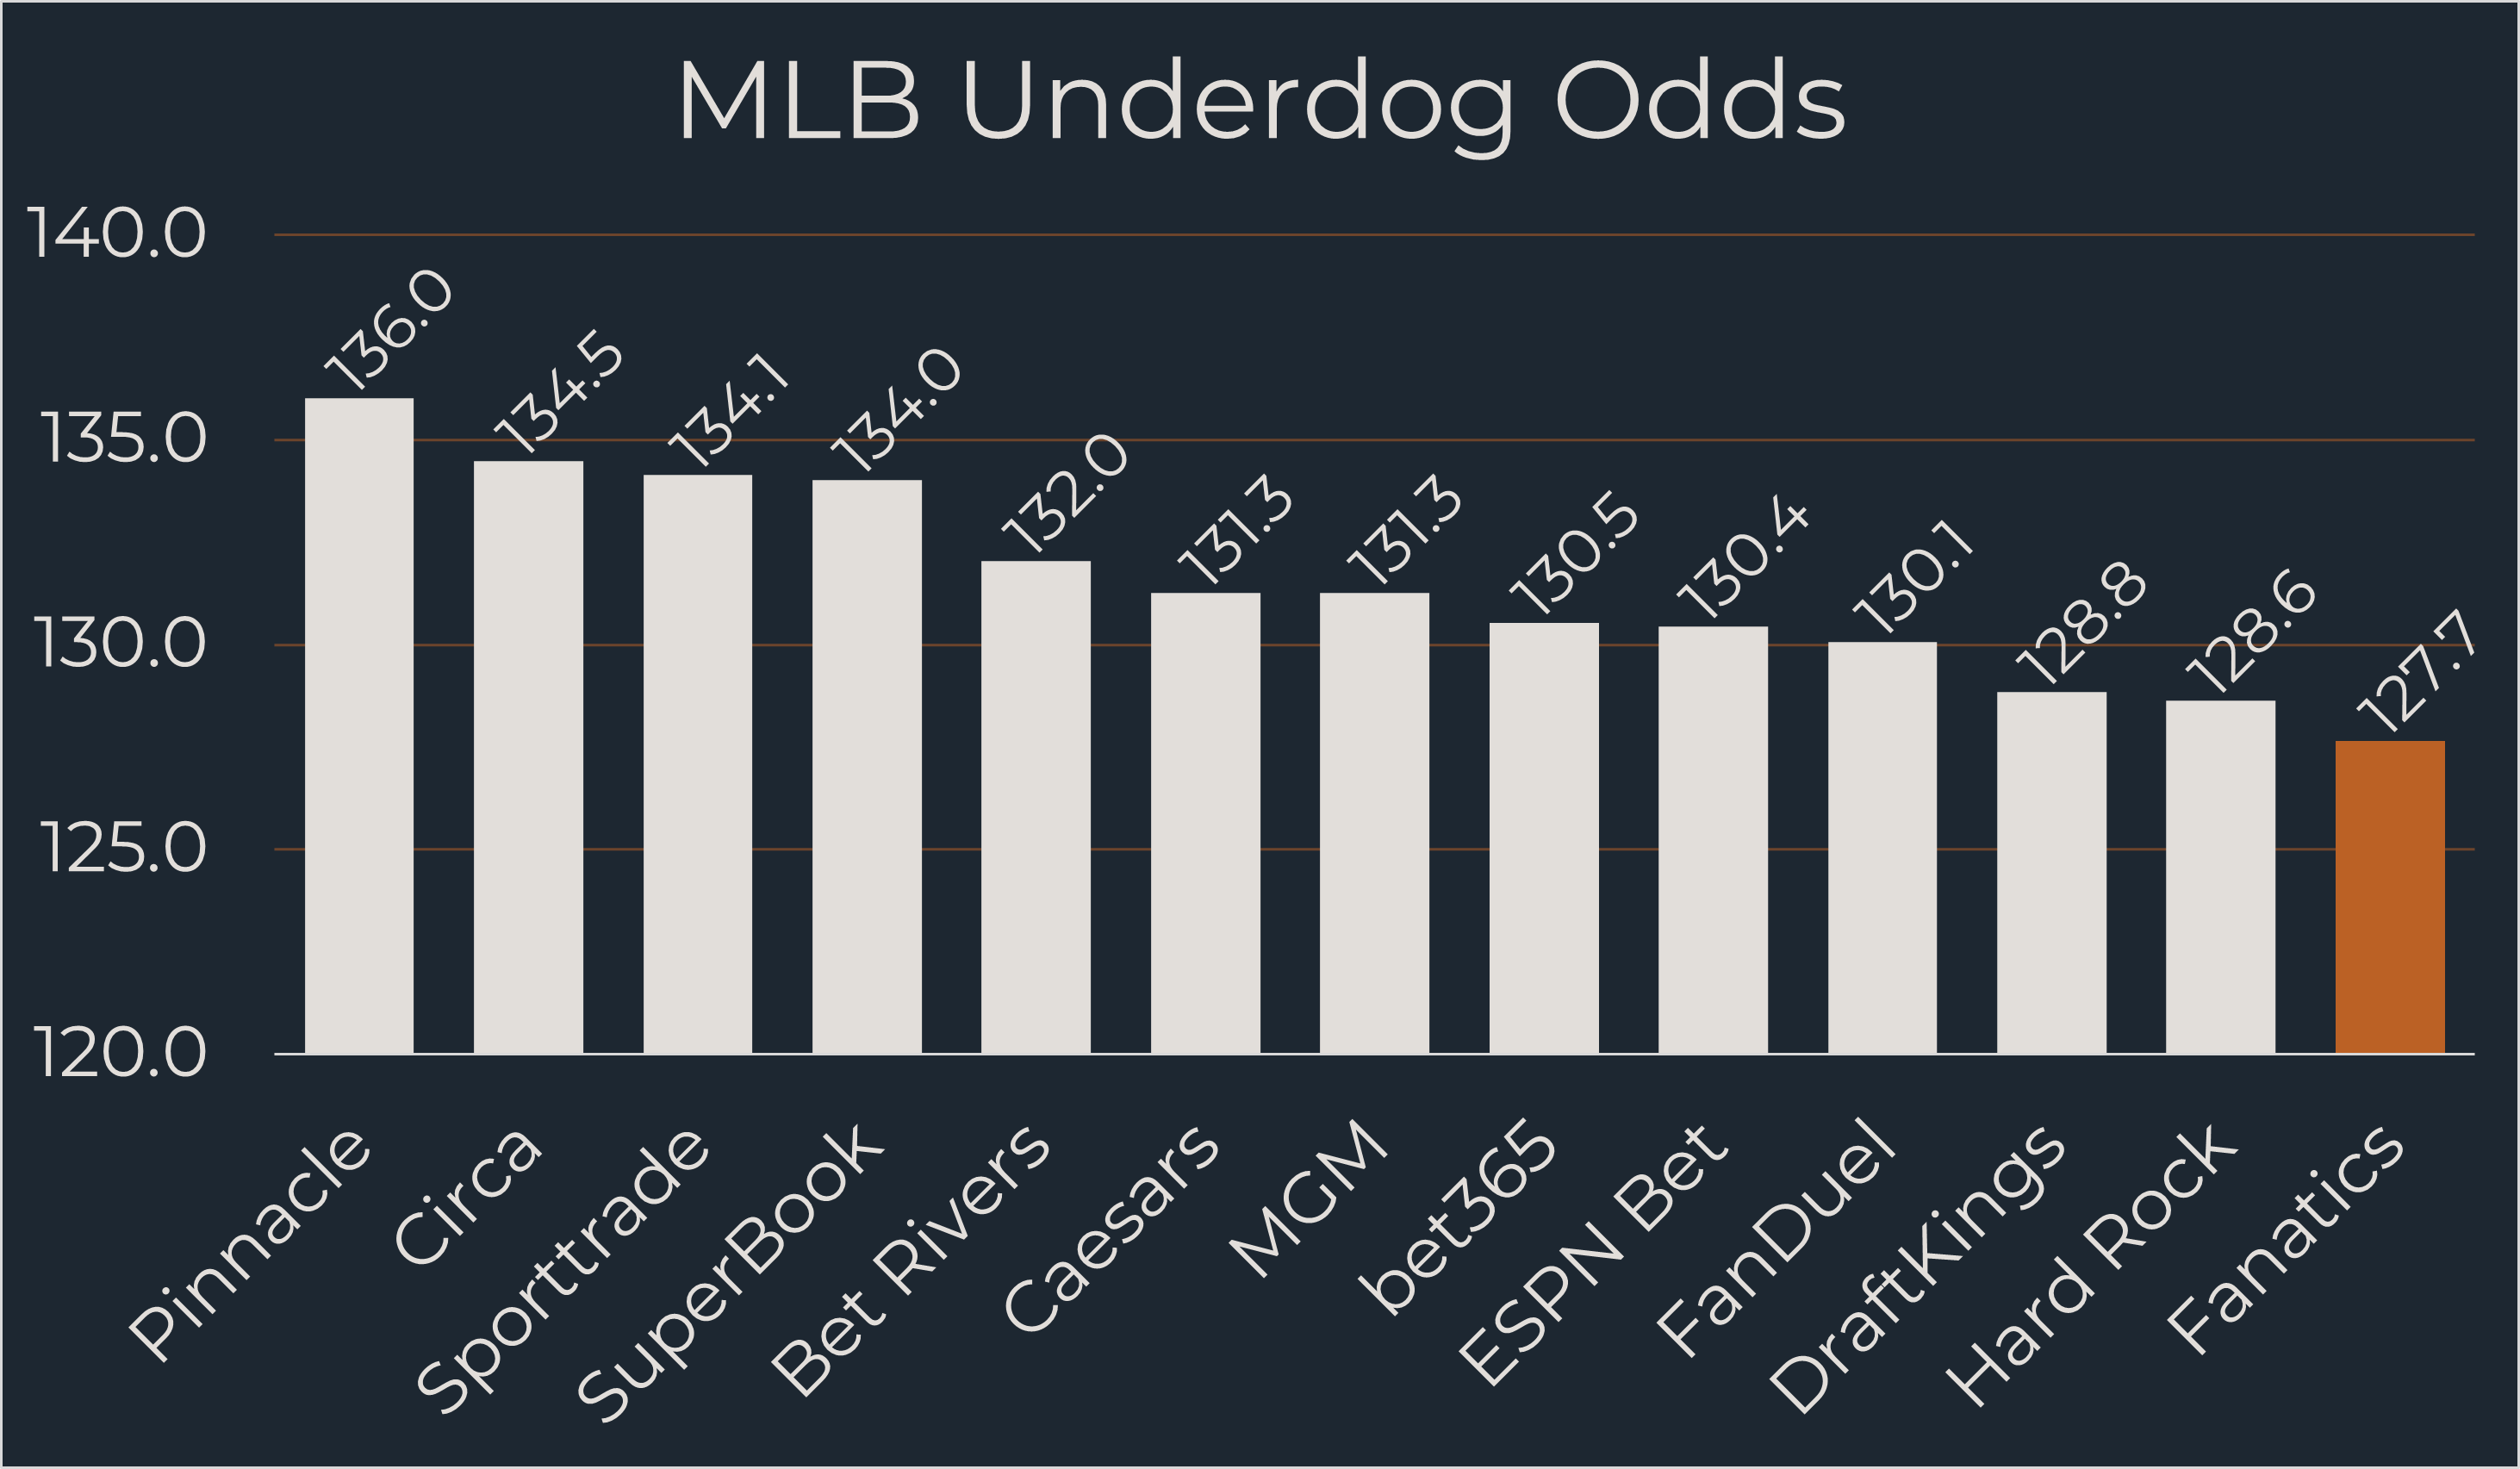 Fanatics MLB Odds comparison chart